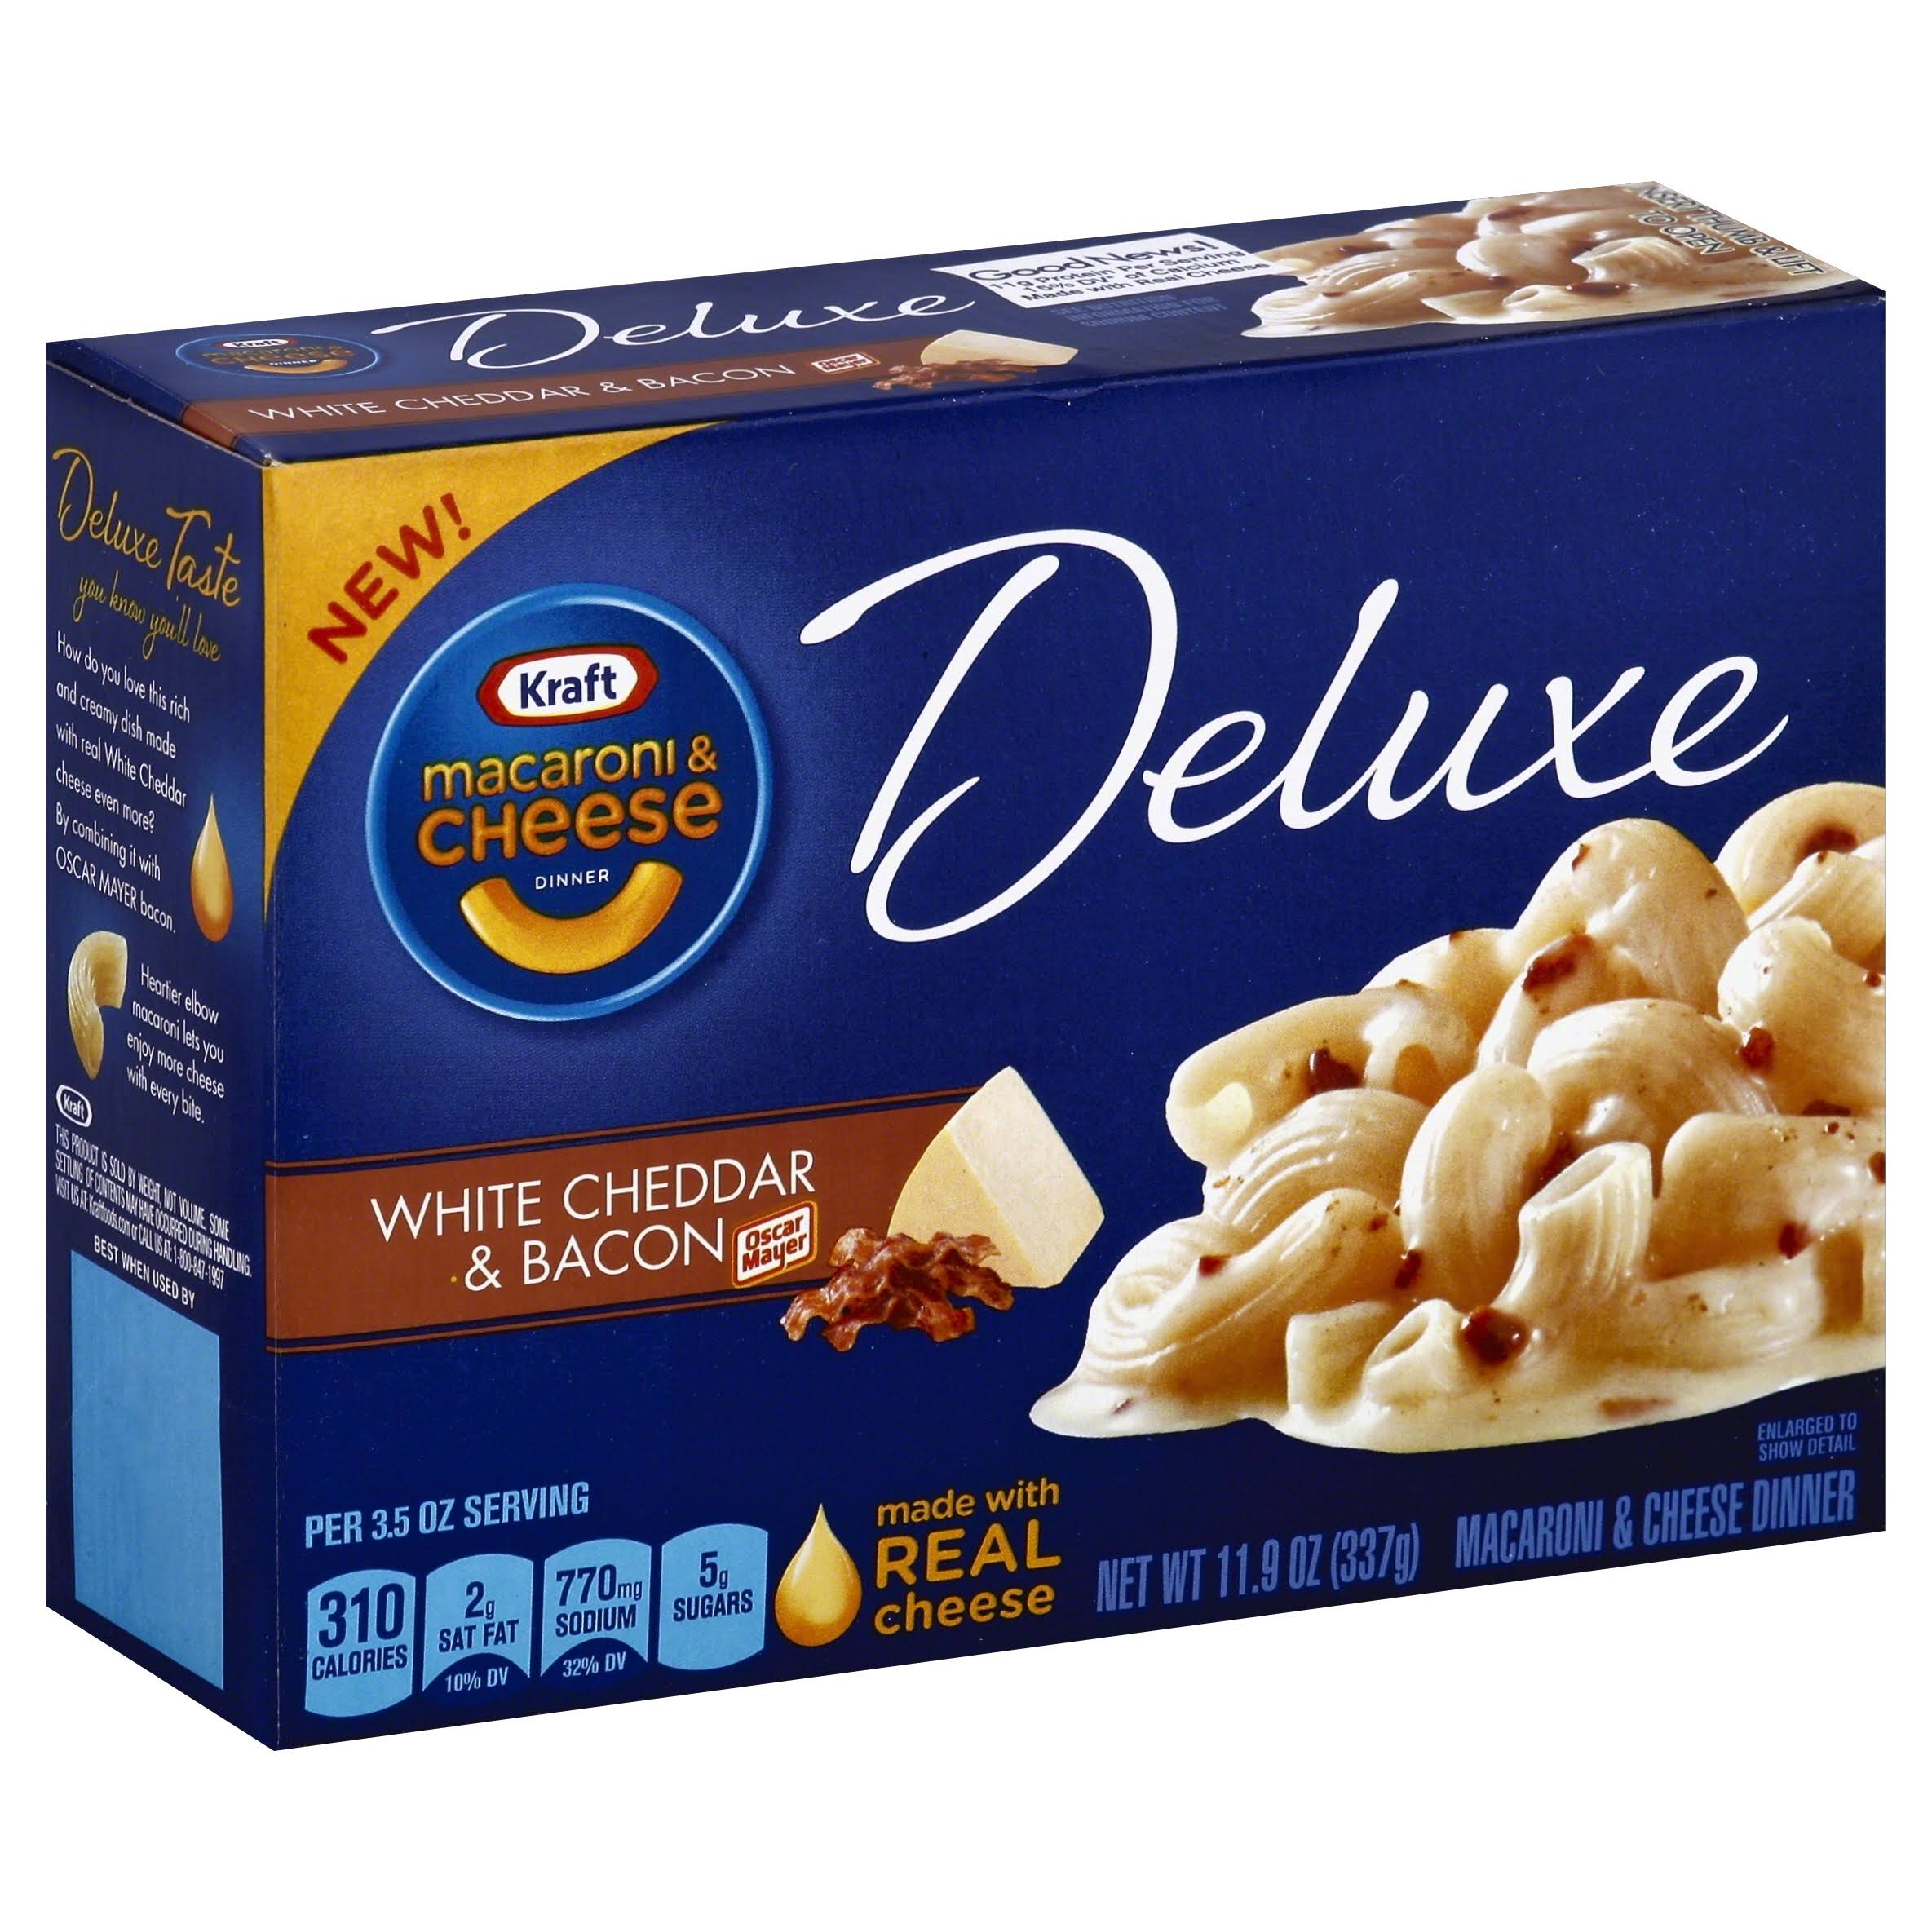 Kraft Deluxe Macaroni & Cheese Dinner, White Cheddar & Bacon - 11.9 oz